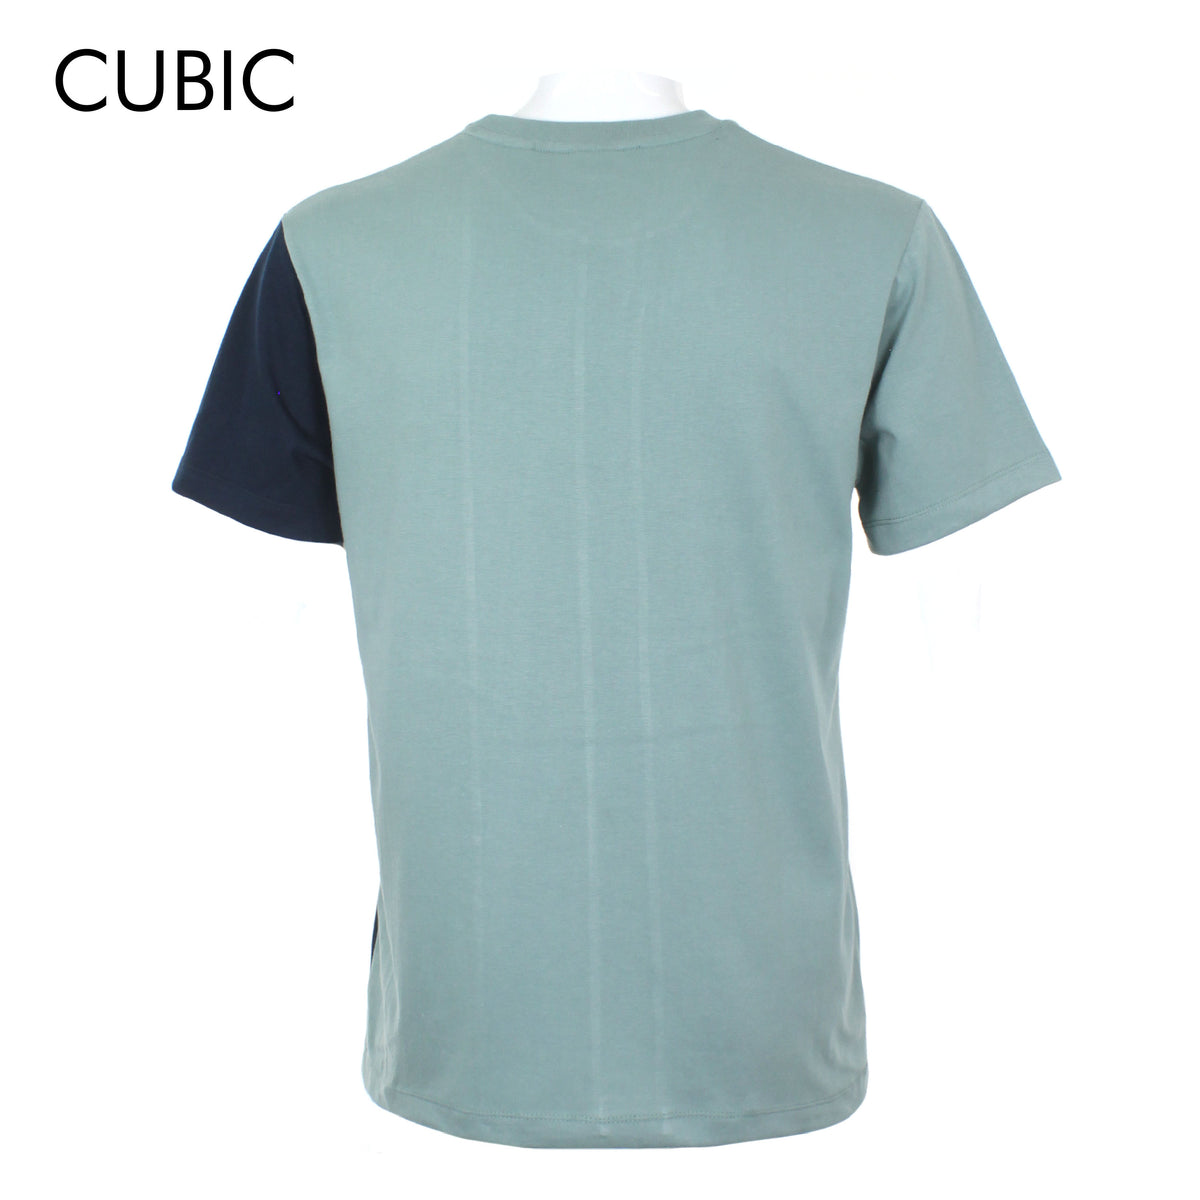 Cubic Mens Round Neck Tees T-Shirt Plain Shirt Top Top for Men - CMJ2342R